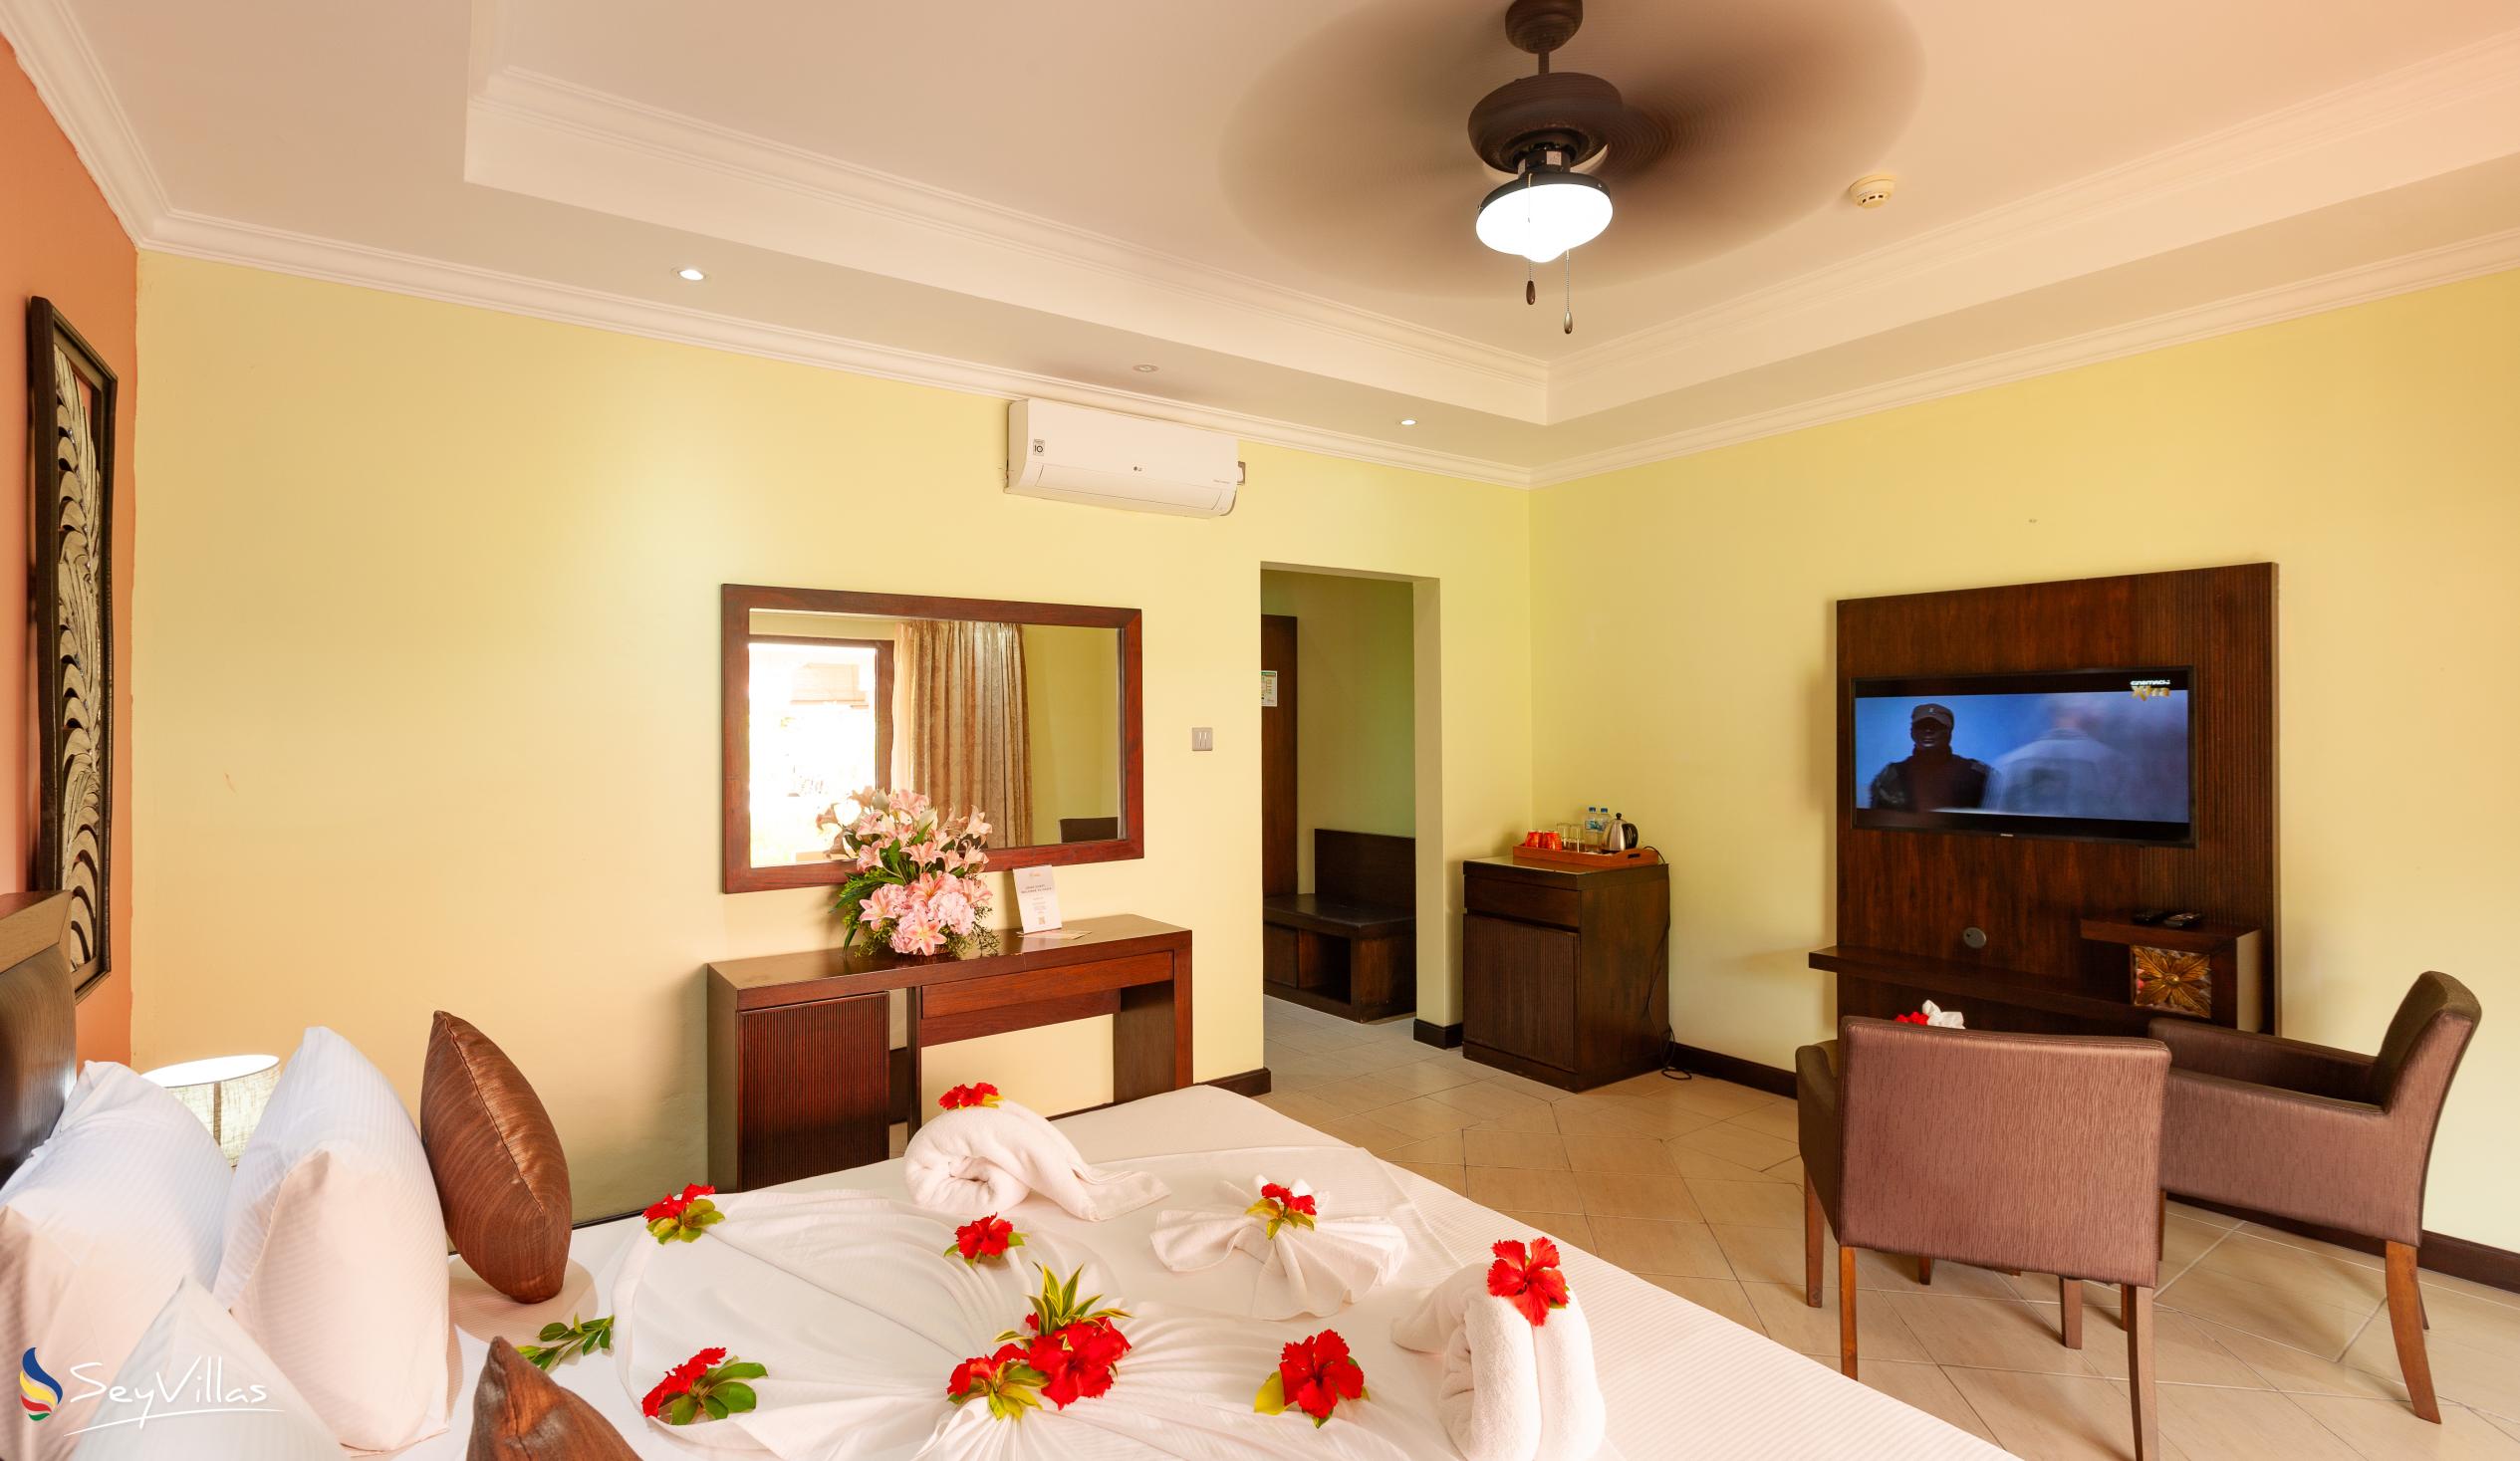 Photo 35: Oasis Hotel, Restaurant & Spa - Standard Room - Praslin (Seychelles)